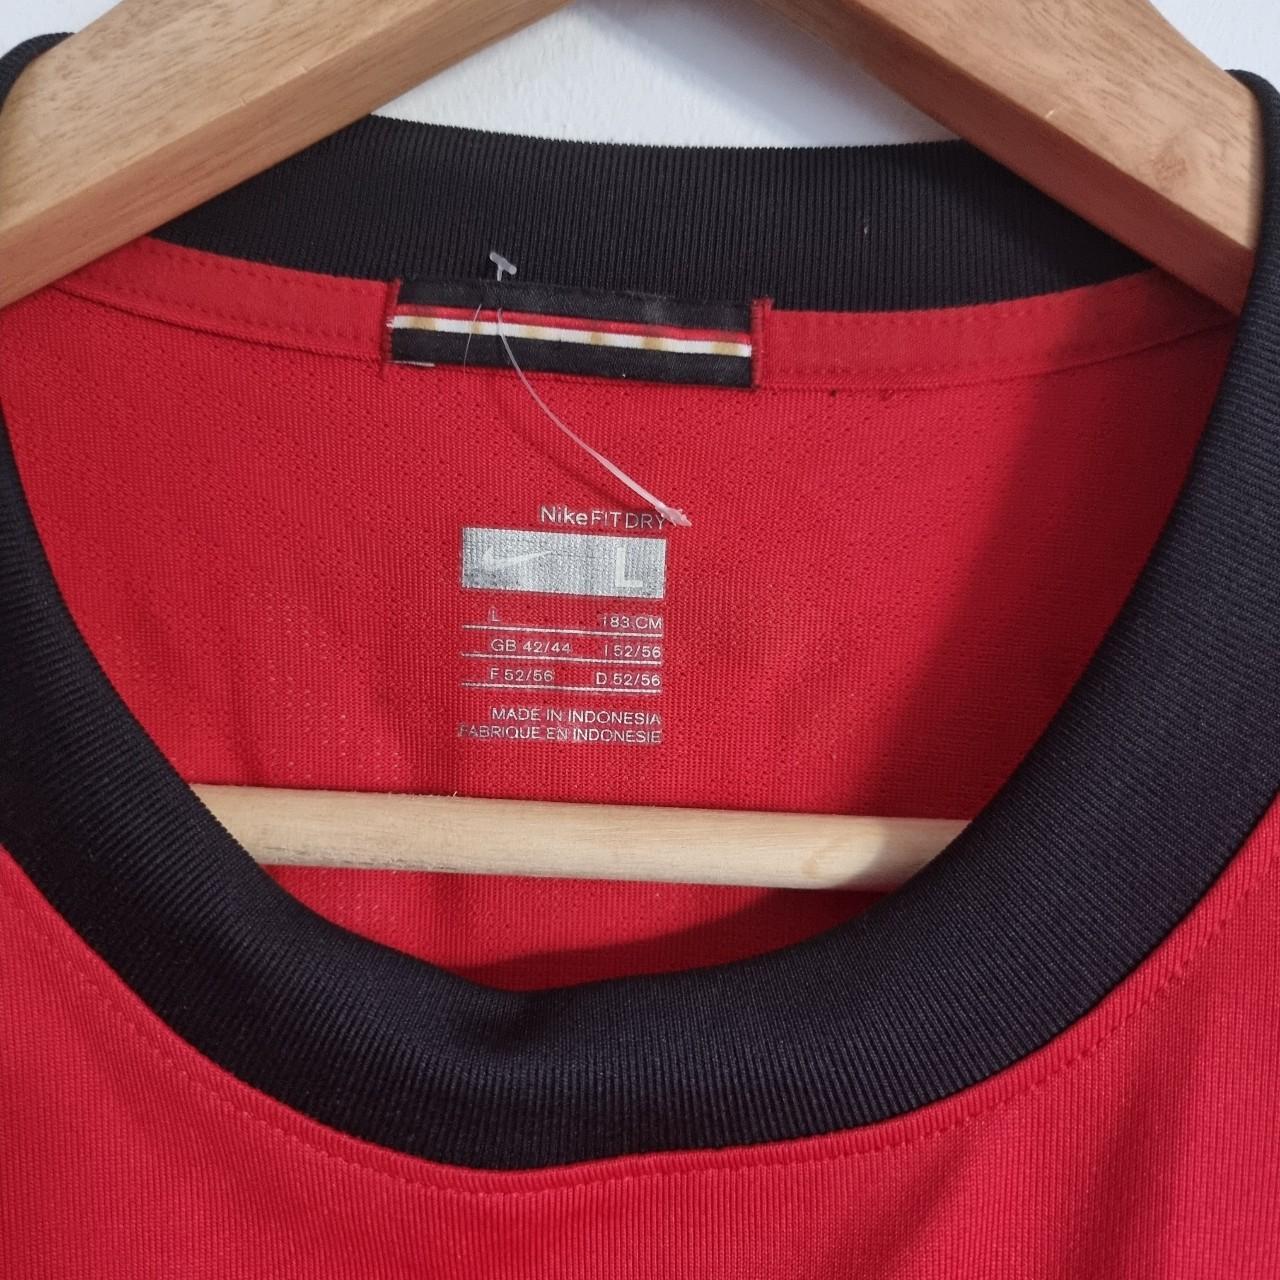 Nike Men's Red and Black T-shirt | Depop